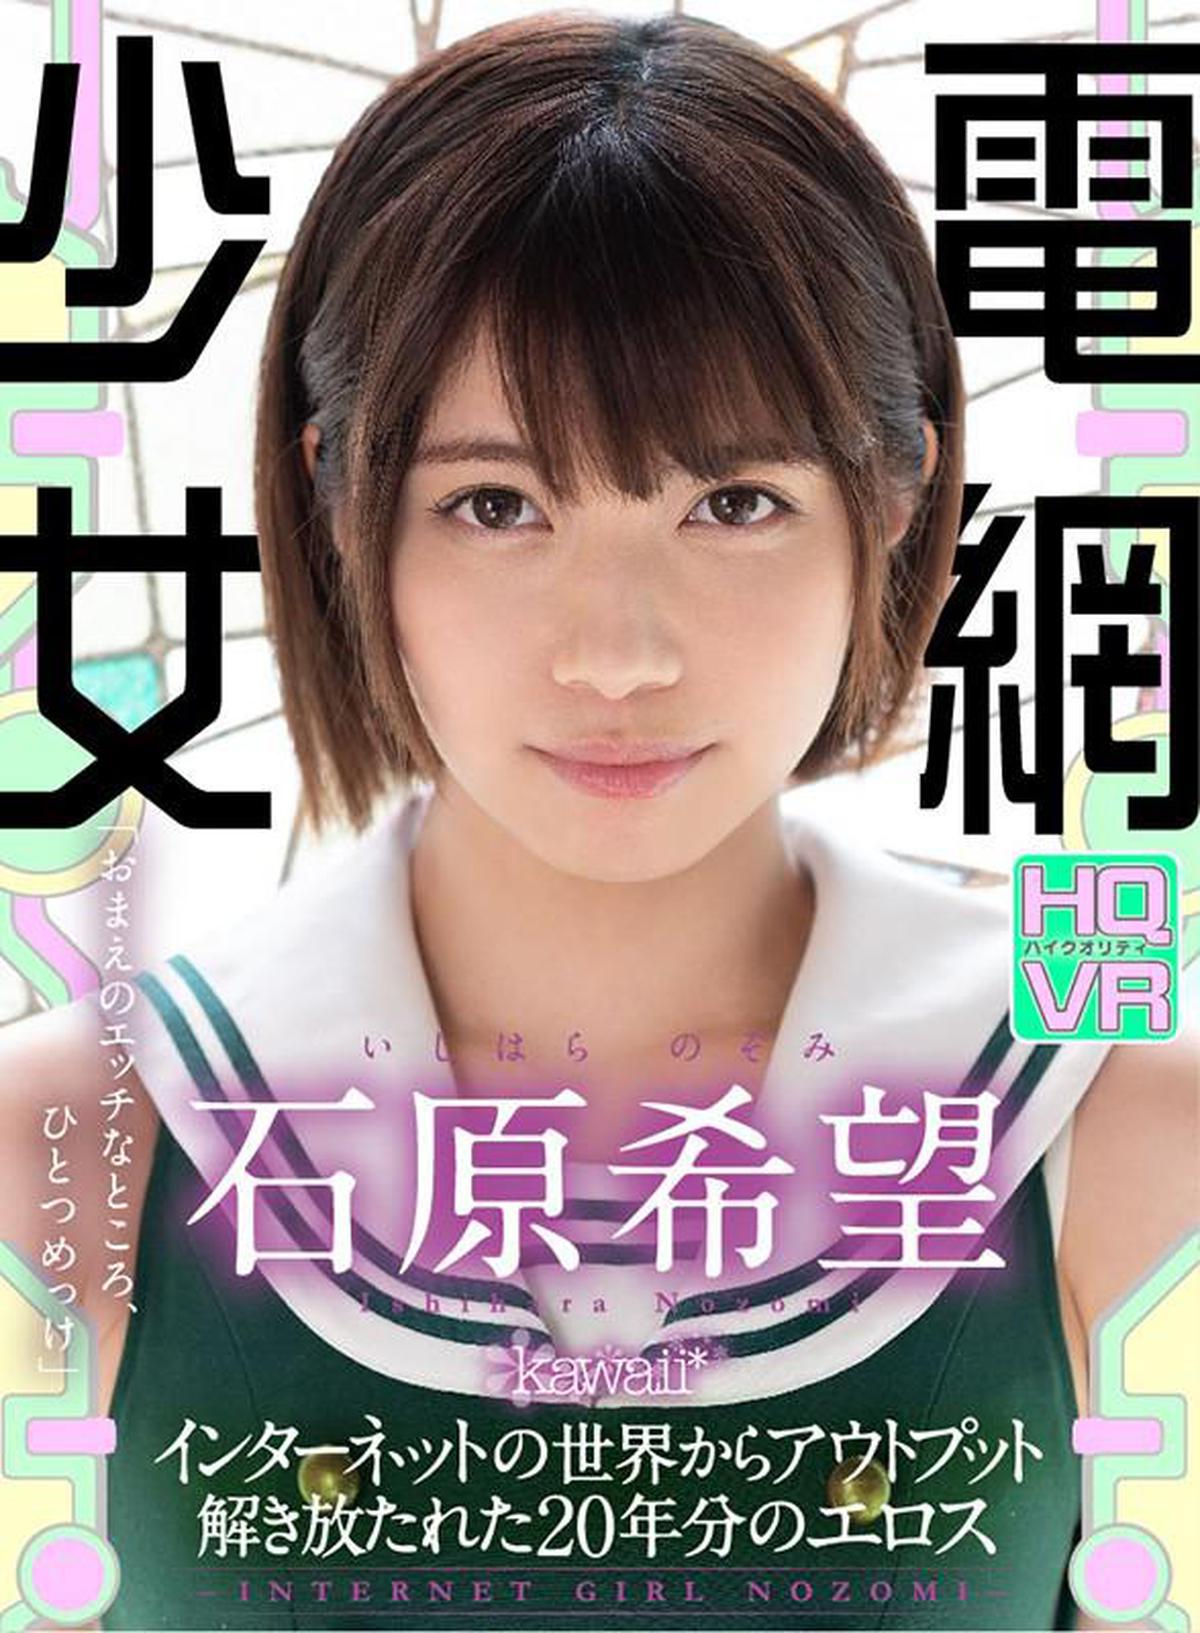 (VR) KAVR-097 电动网女-INTERNET GIRL NOZOMI- 释放20年的爱神石原希